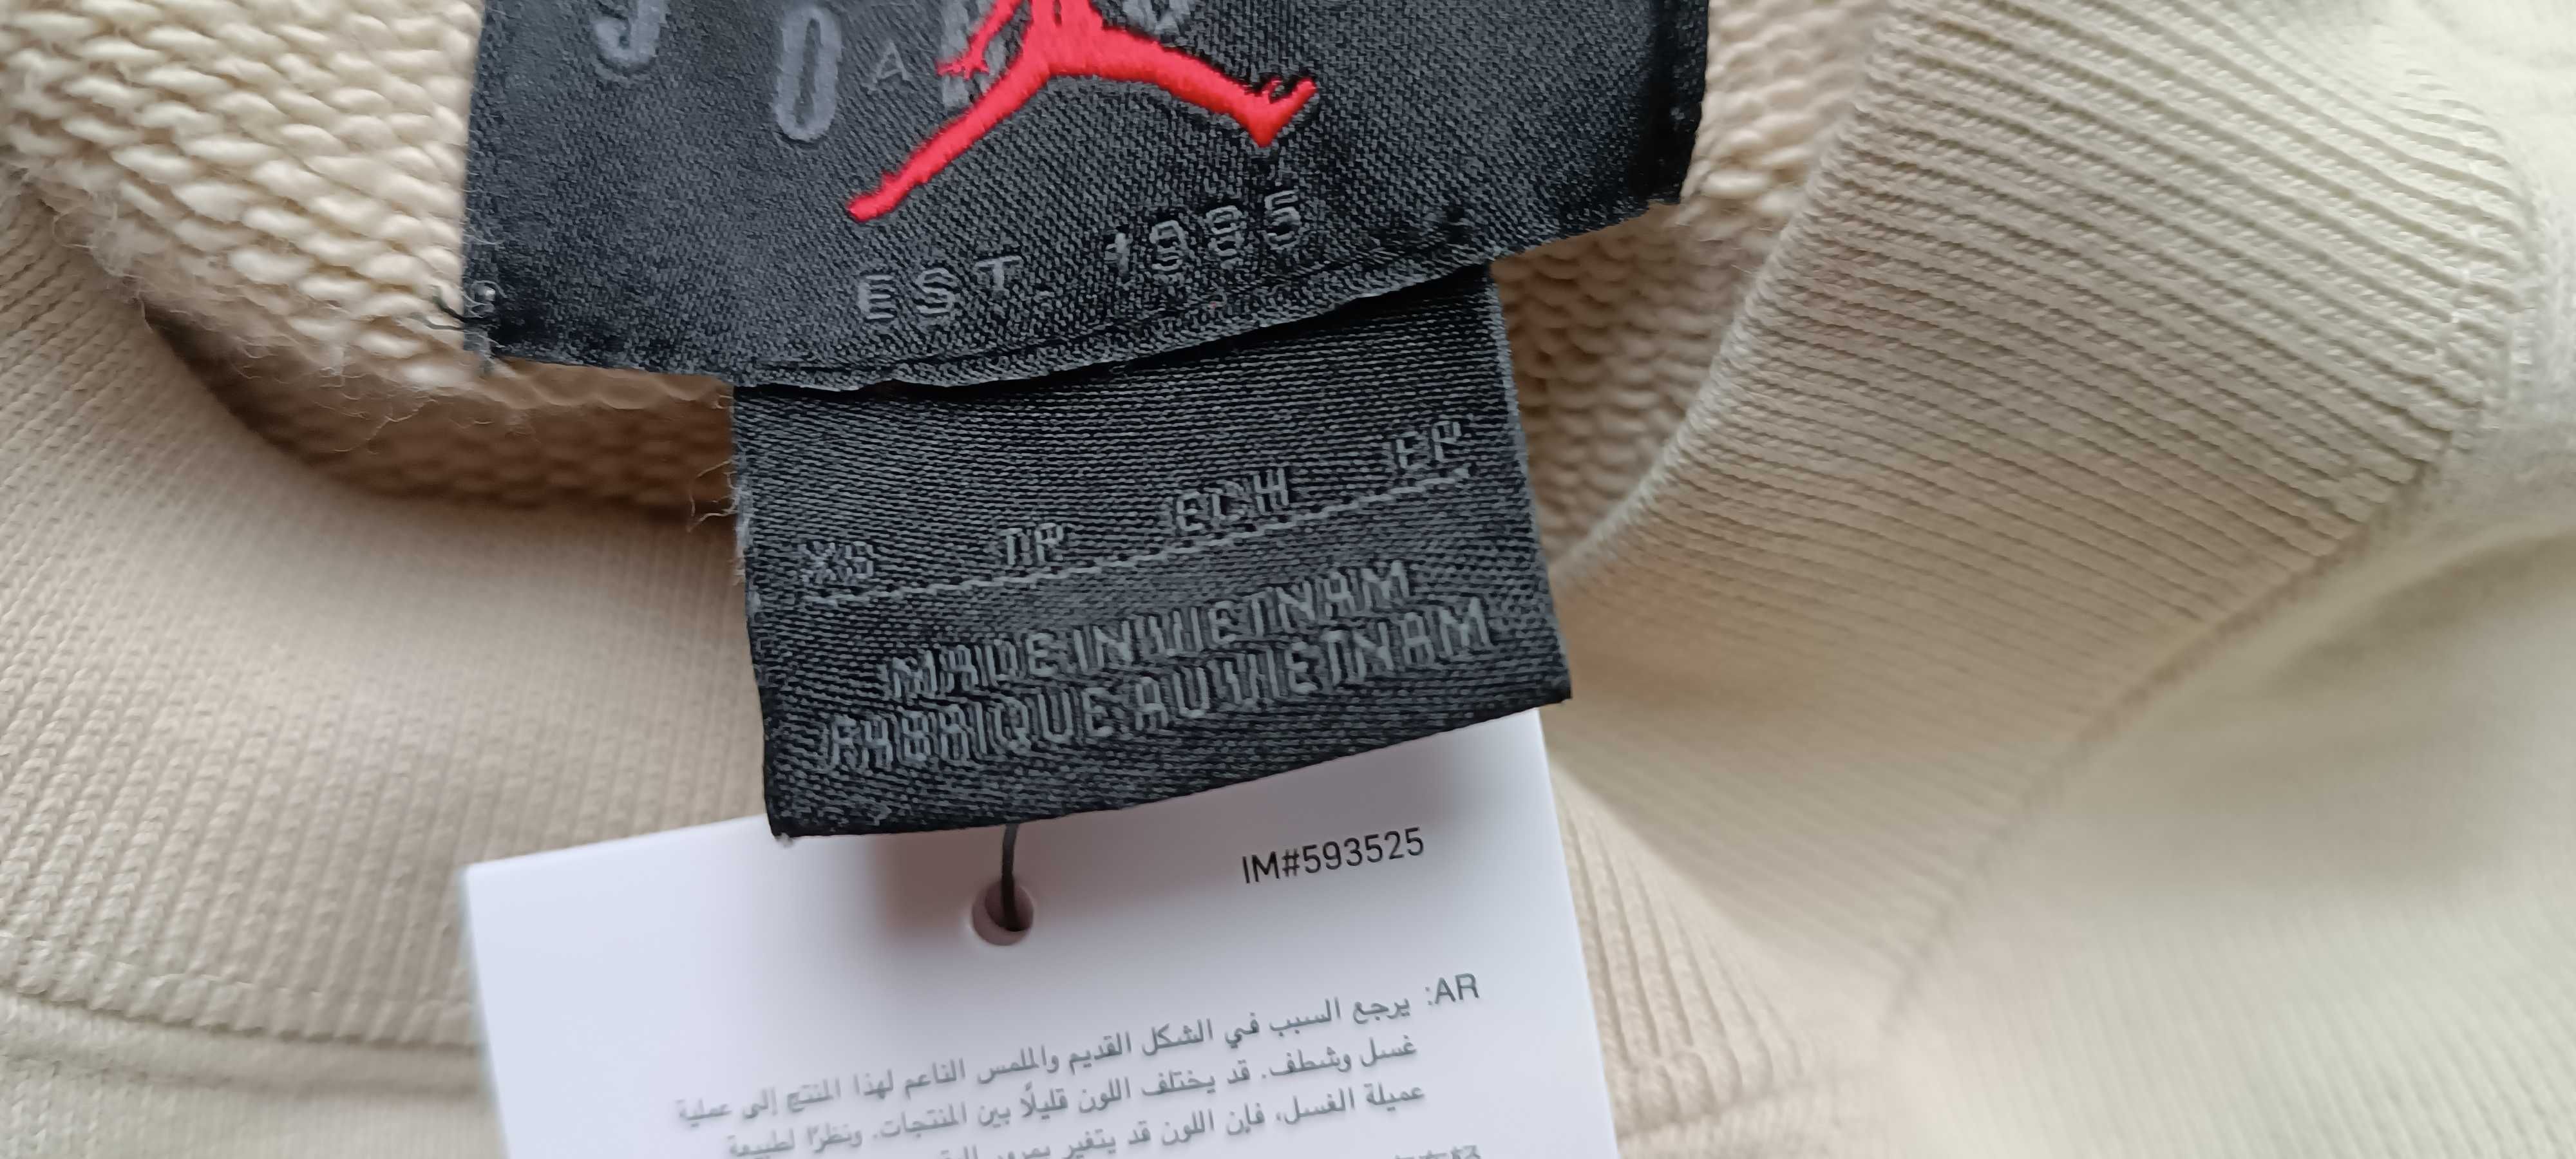 XS (EU 32-34) Nike Jordan x Shelflife bluza DV7014,-206 hoodie